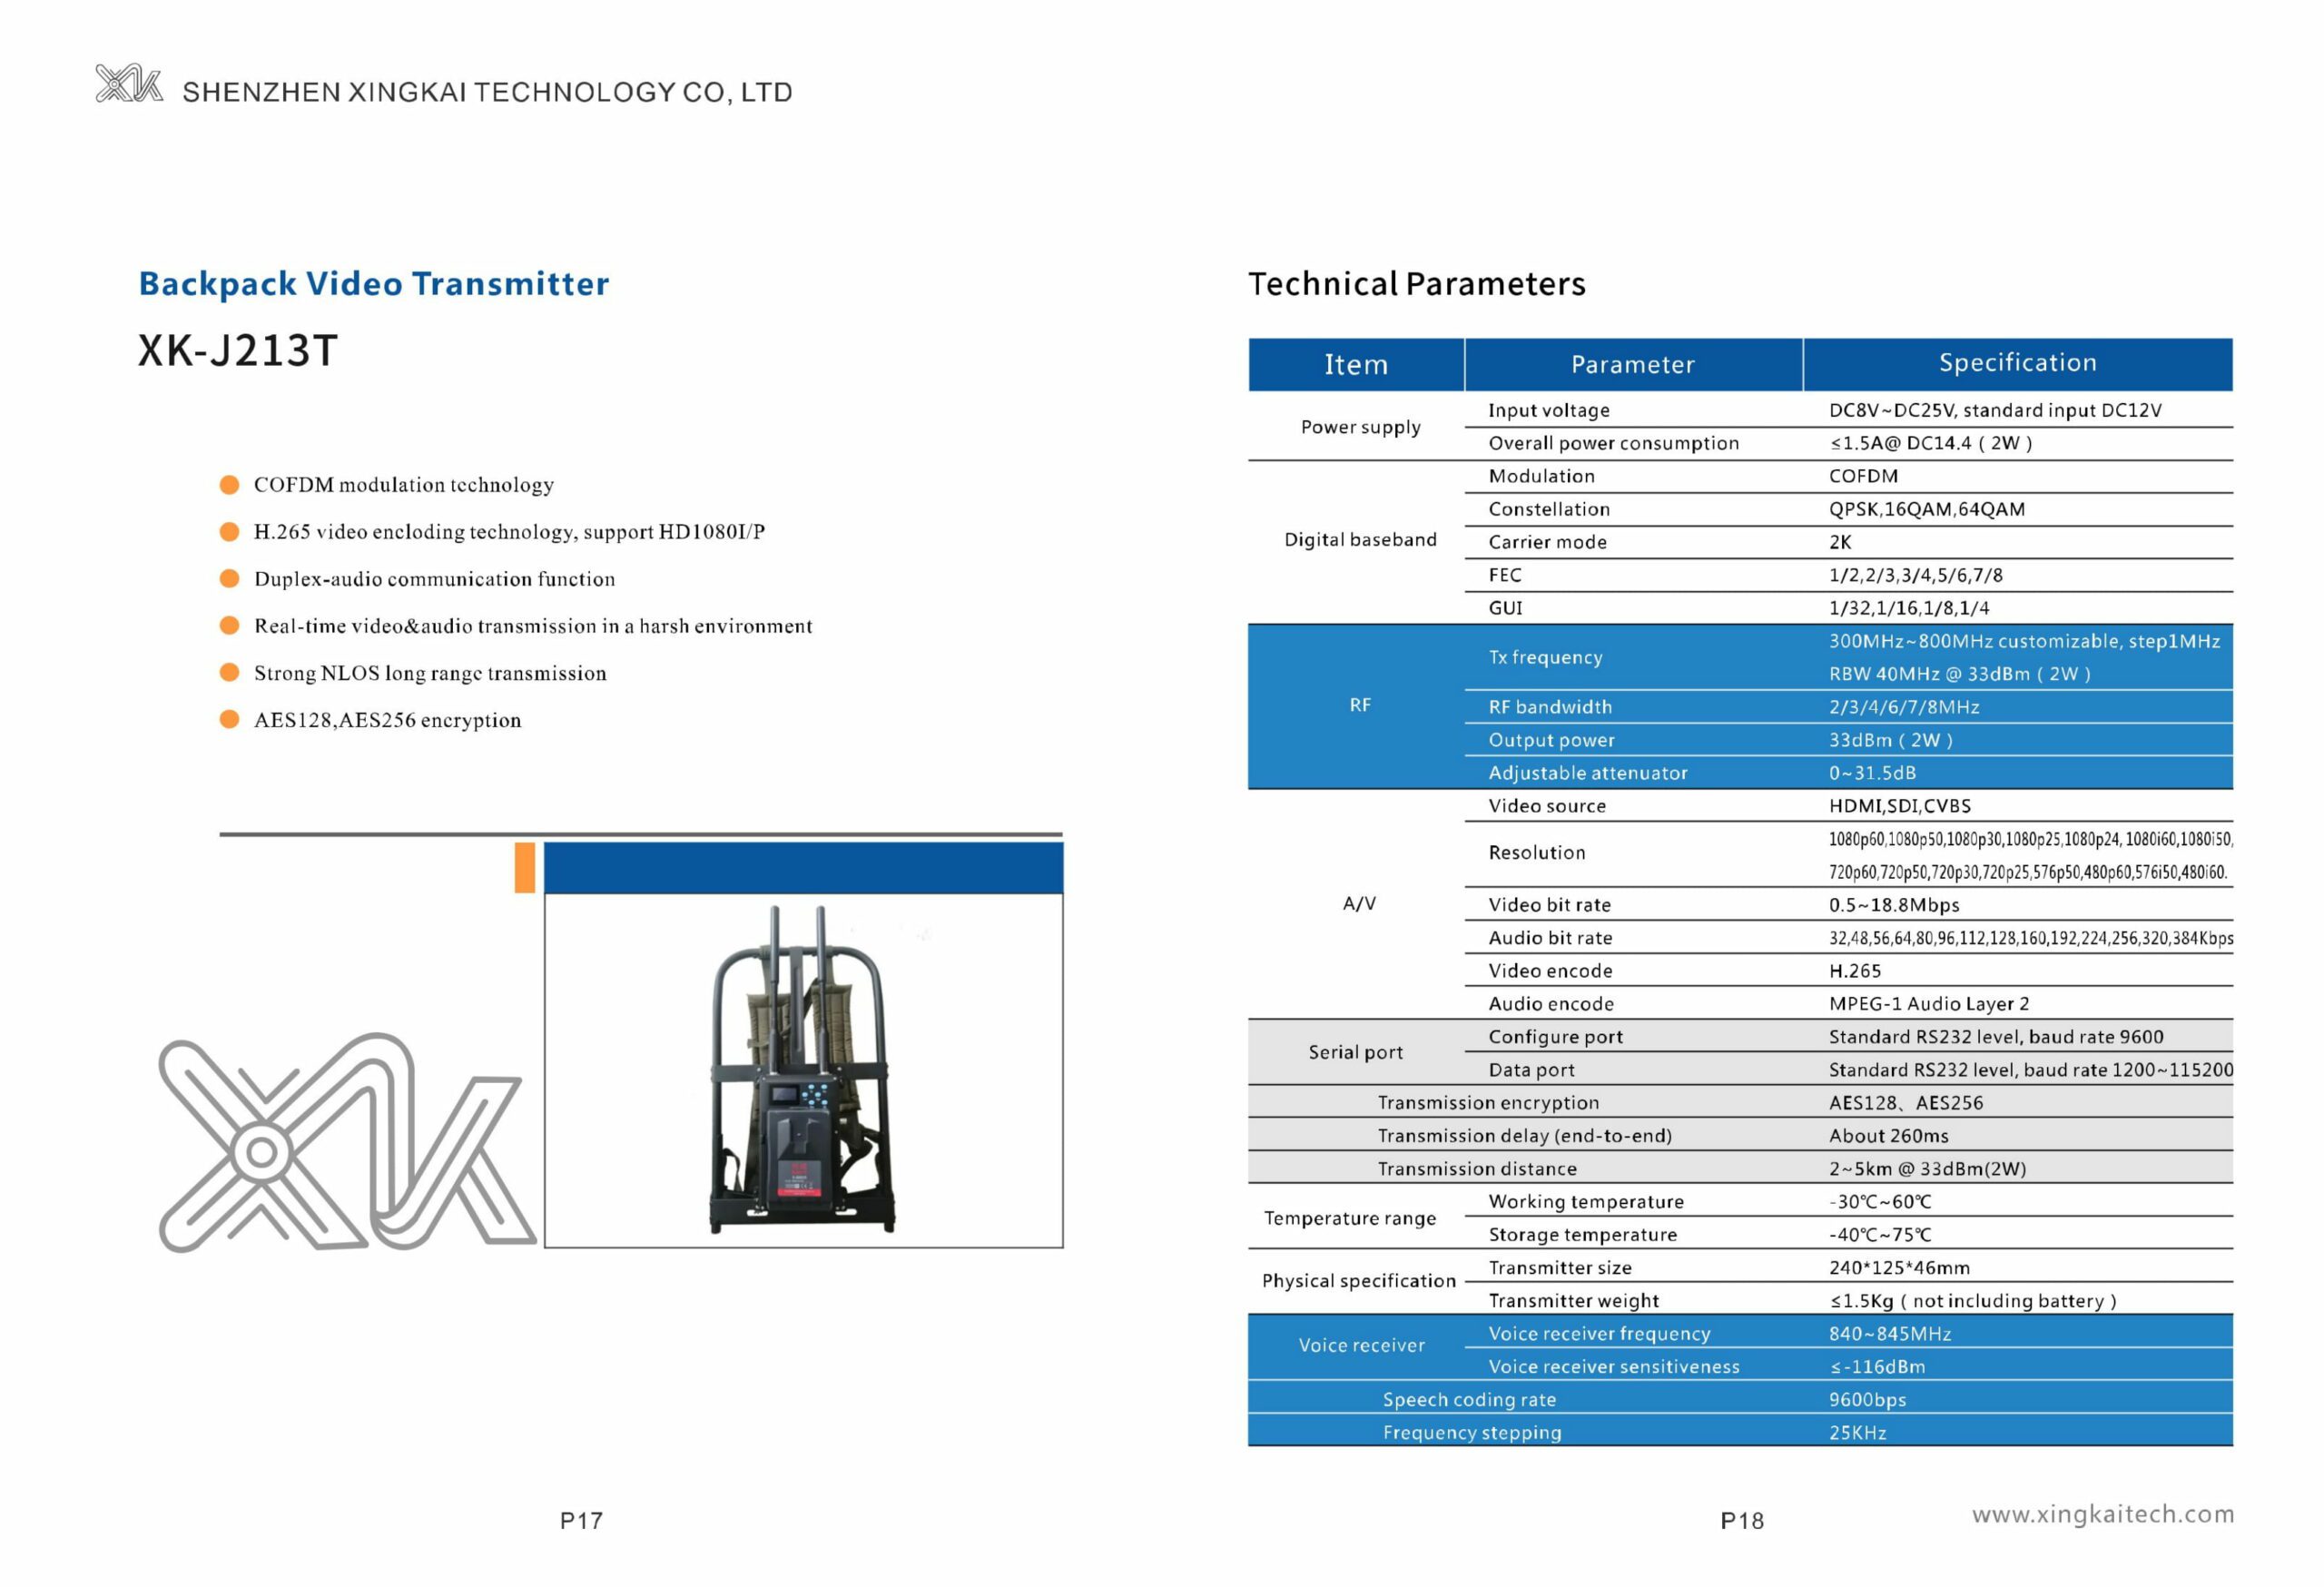 Catalogue Of Shenzhen Xingkai Technology Co. Ltd 10 Scaled